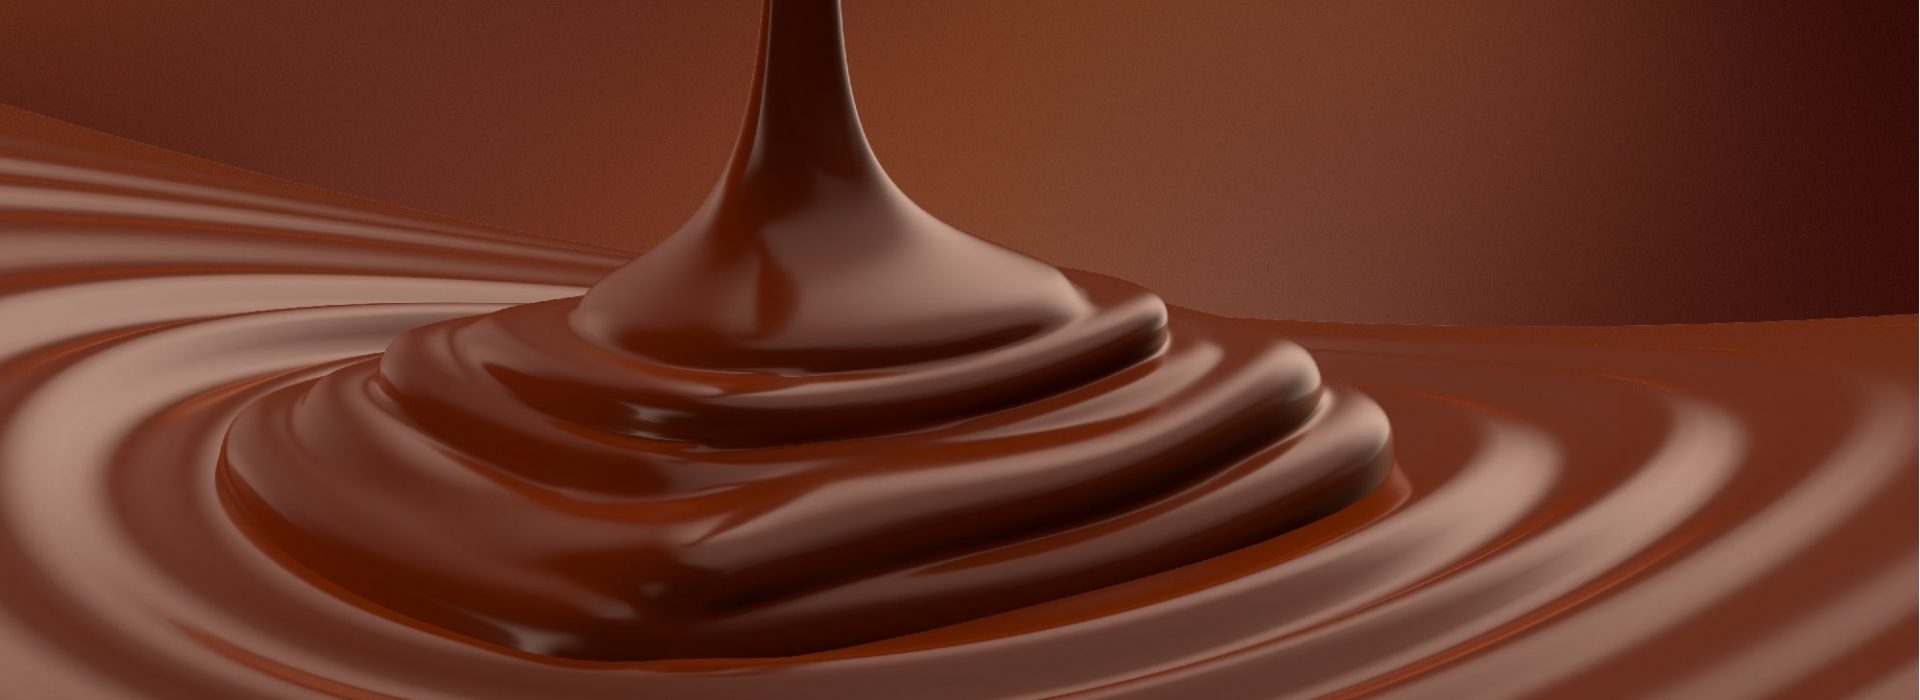 Chocolate Day Blog Image